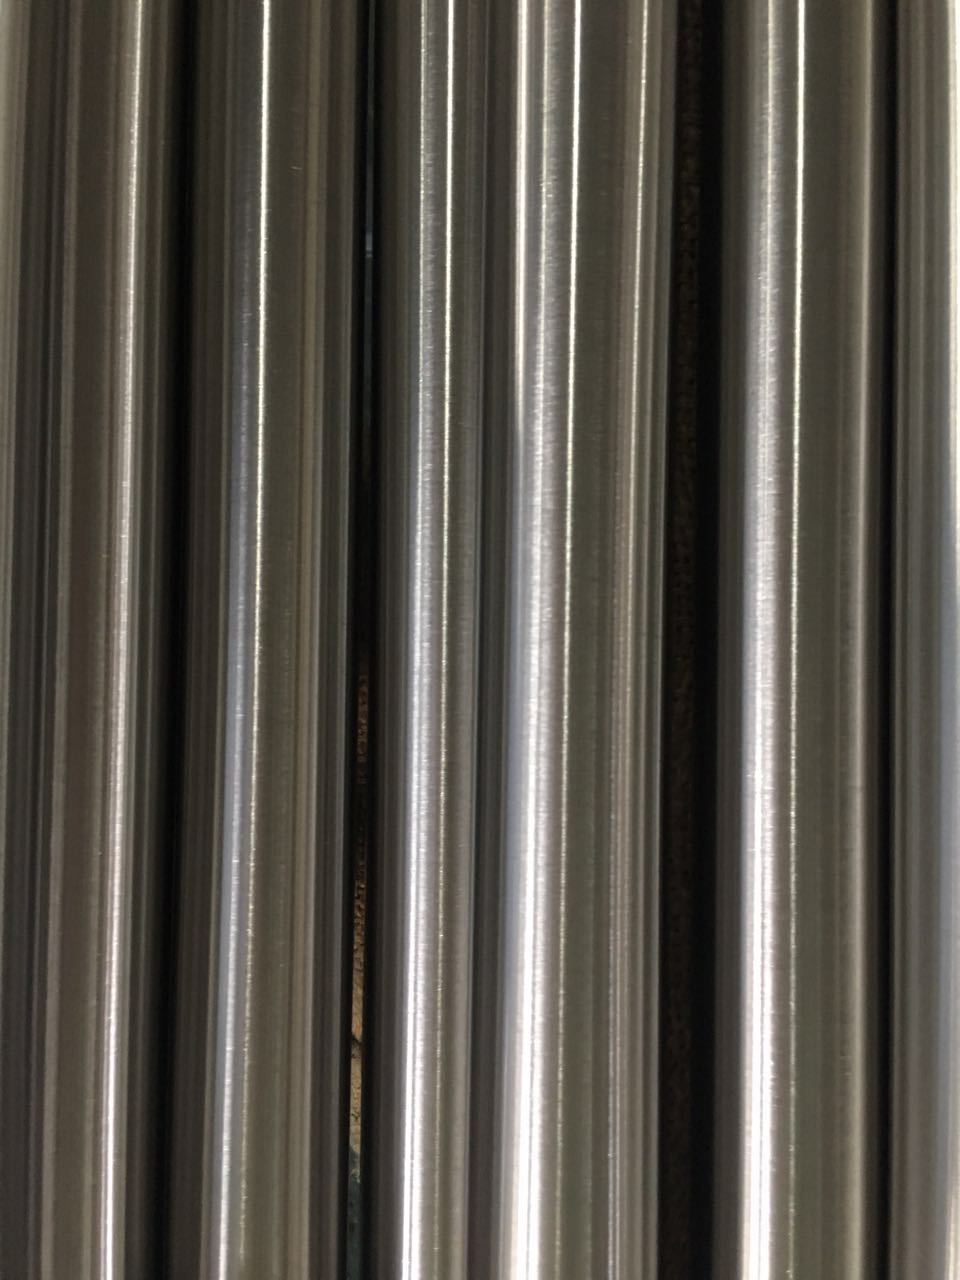 stainless steel tube